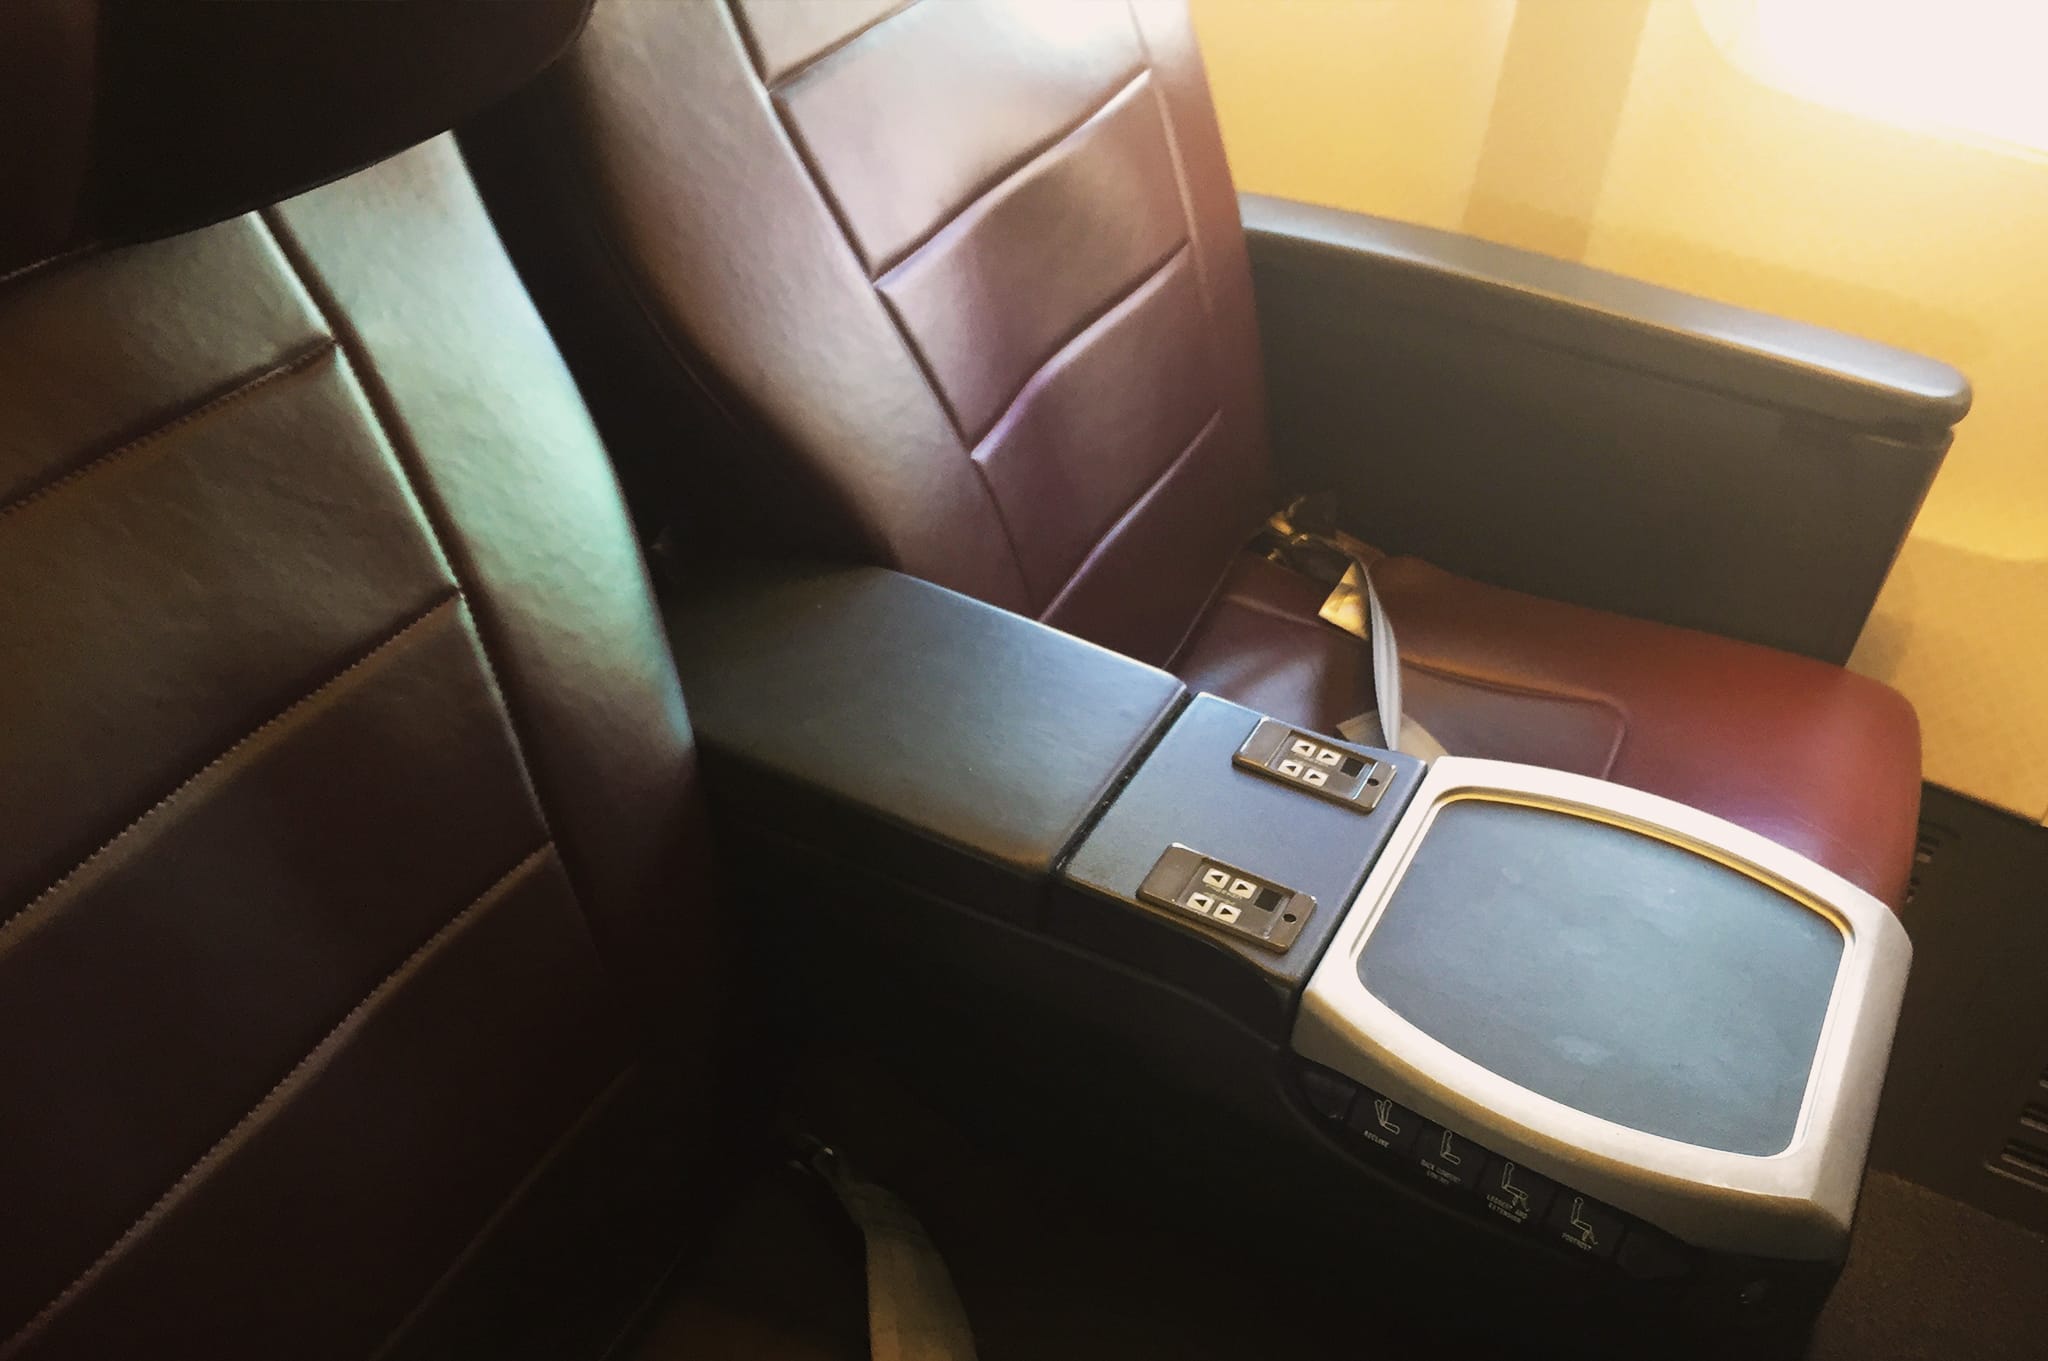 Qantas 737 Business Class Seats with audio video